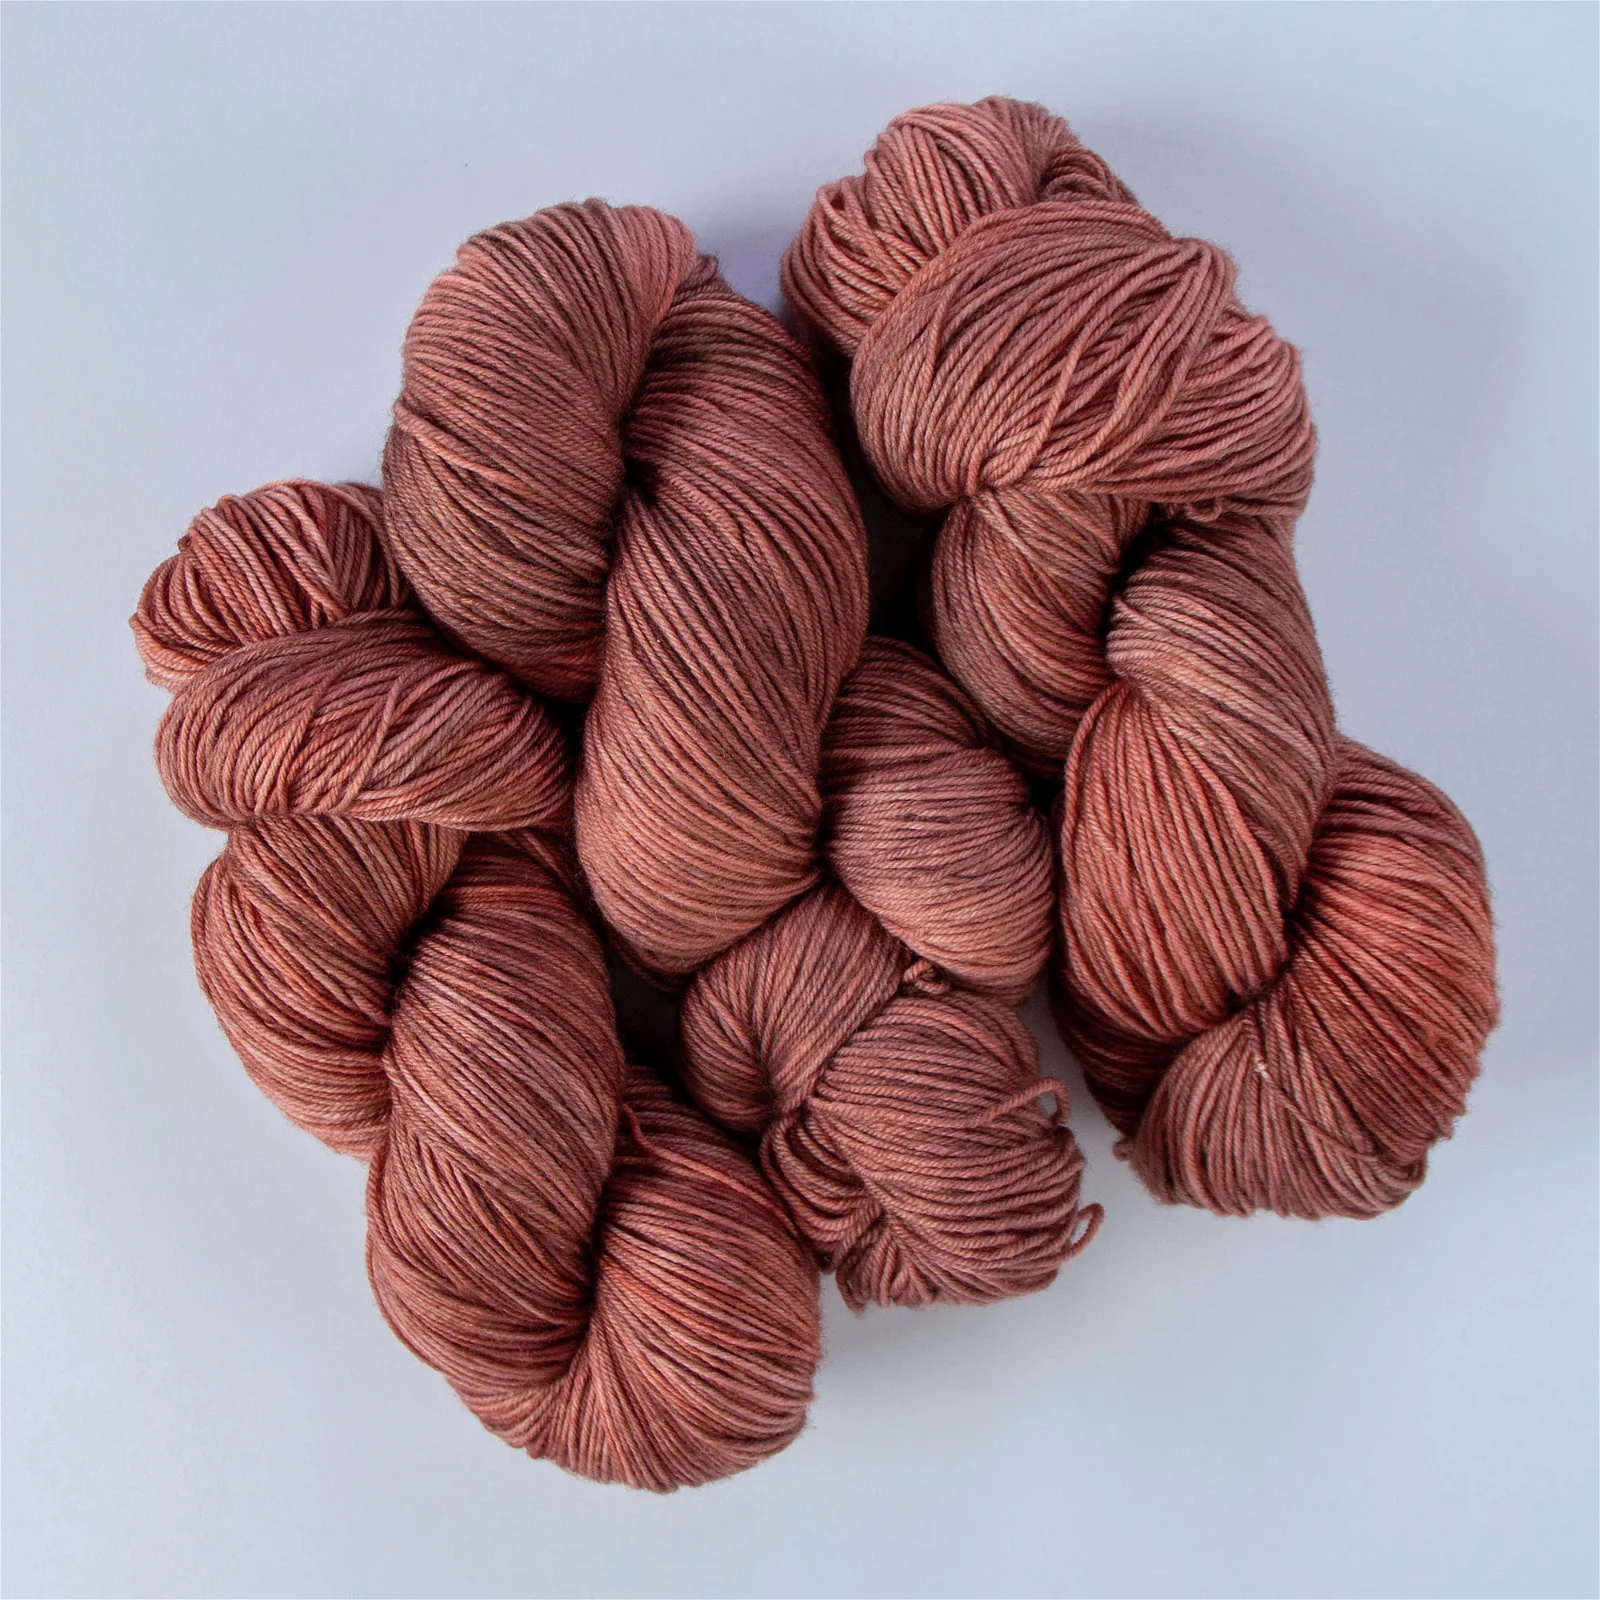 Image of Desert Sunset Sock Yarn in Tones of Orange and Brown -- Hand Dyed Extrafine Merino Wool Blend